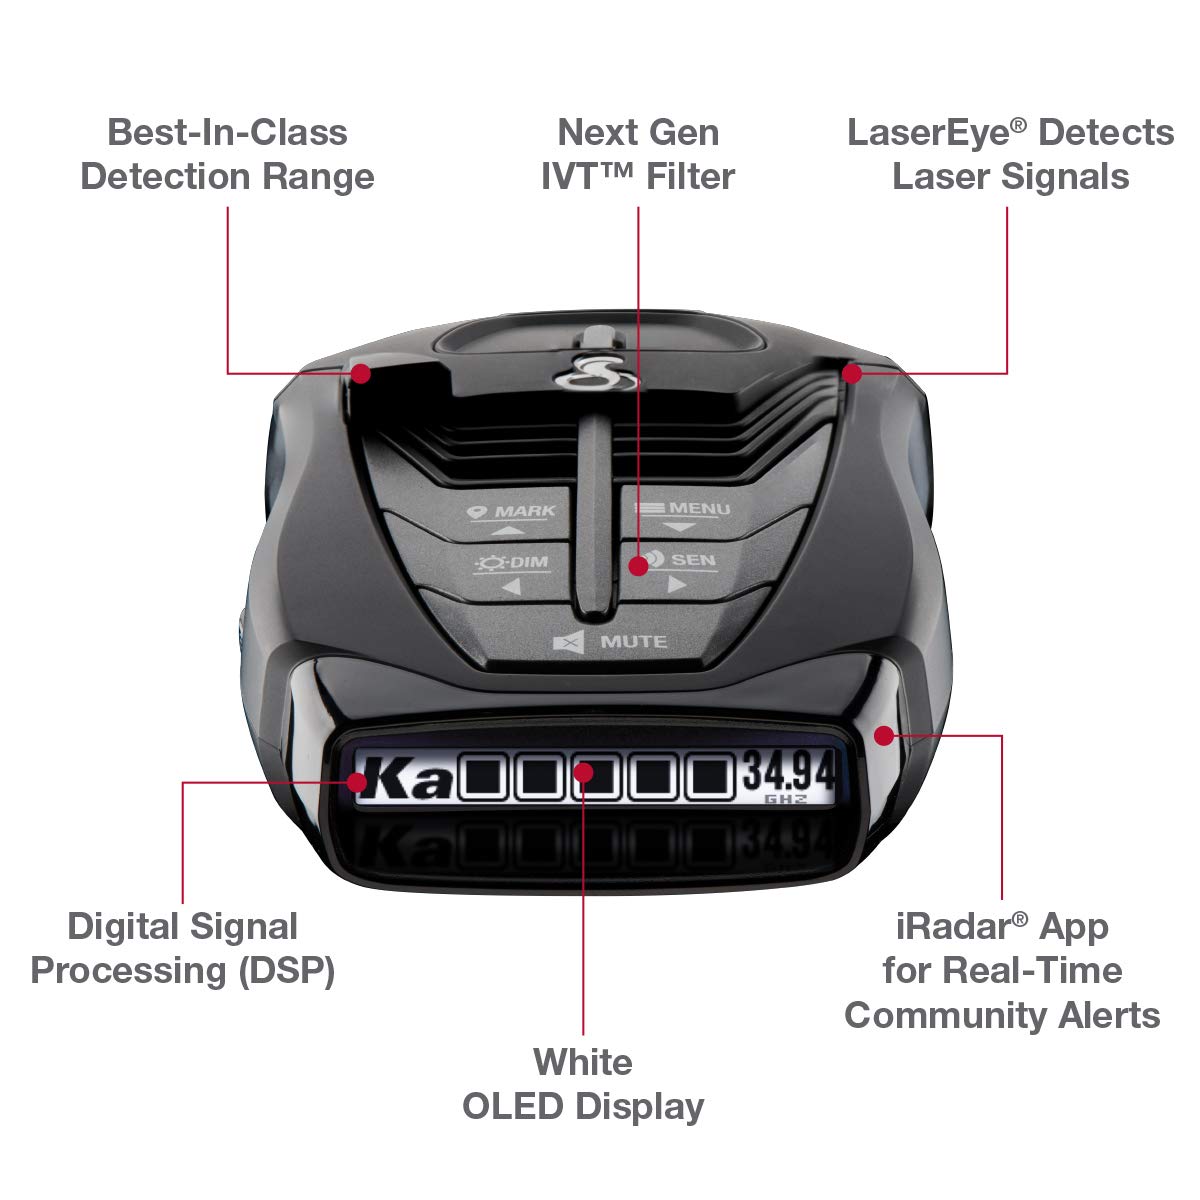 Cobra RAD 480i Laser Radar Detector – Long Range Detection, Bluetooth, iRadar App, LaserEye Front and Rear Detection, Next Gen IVT Filtering, Black